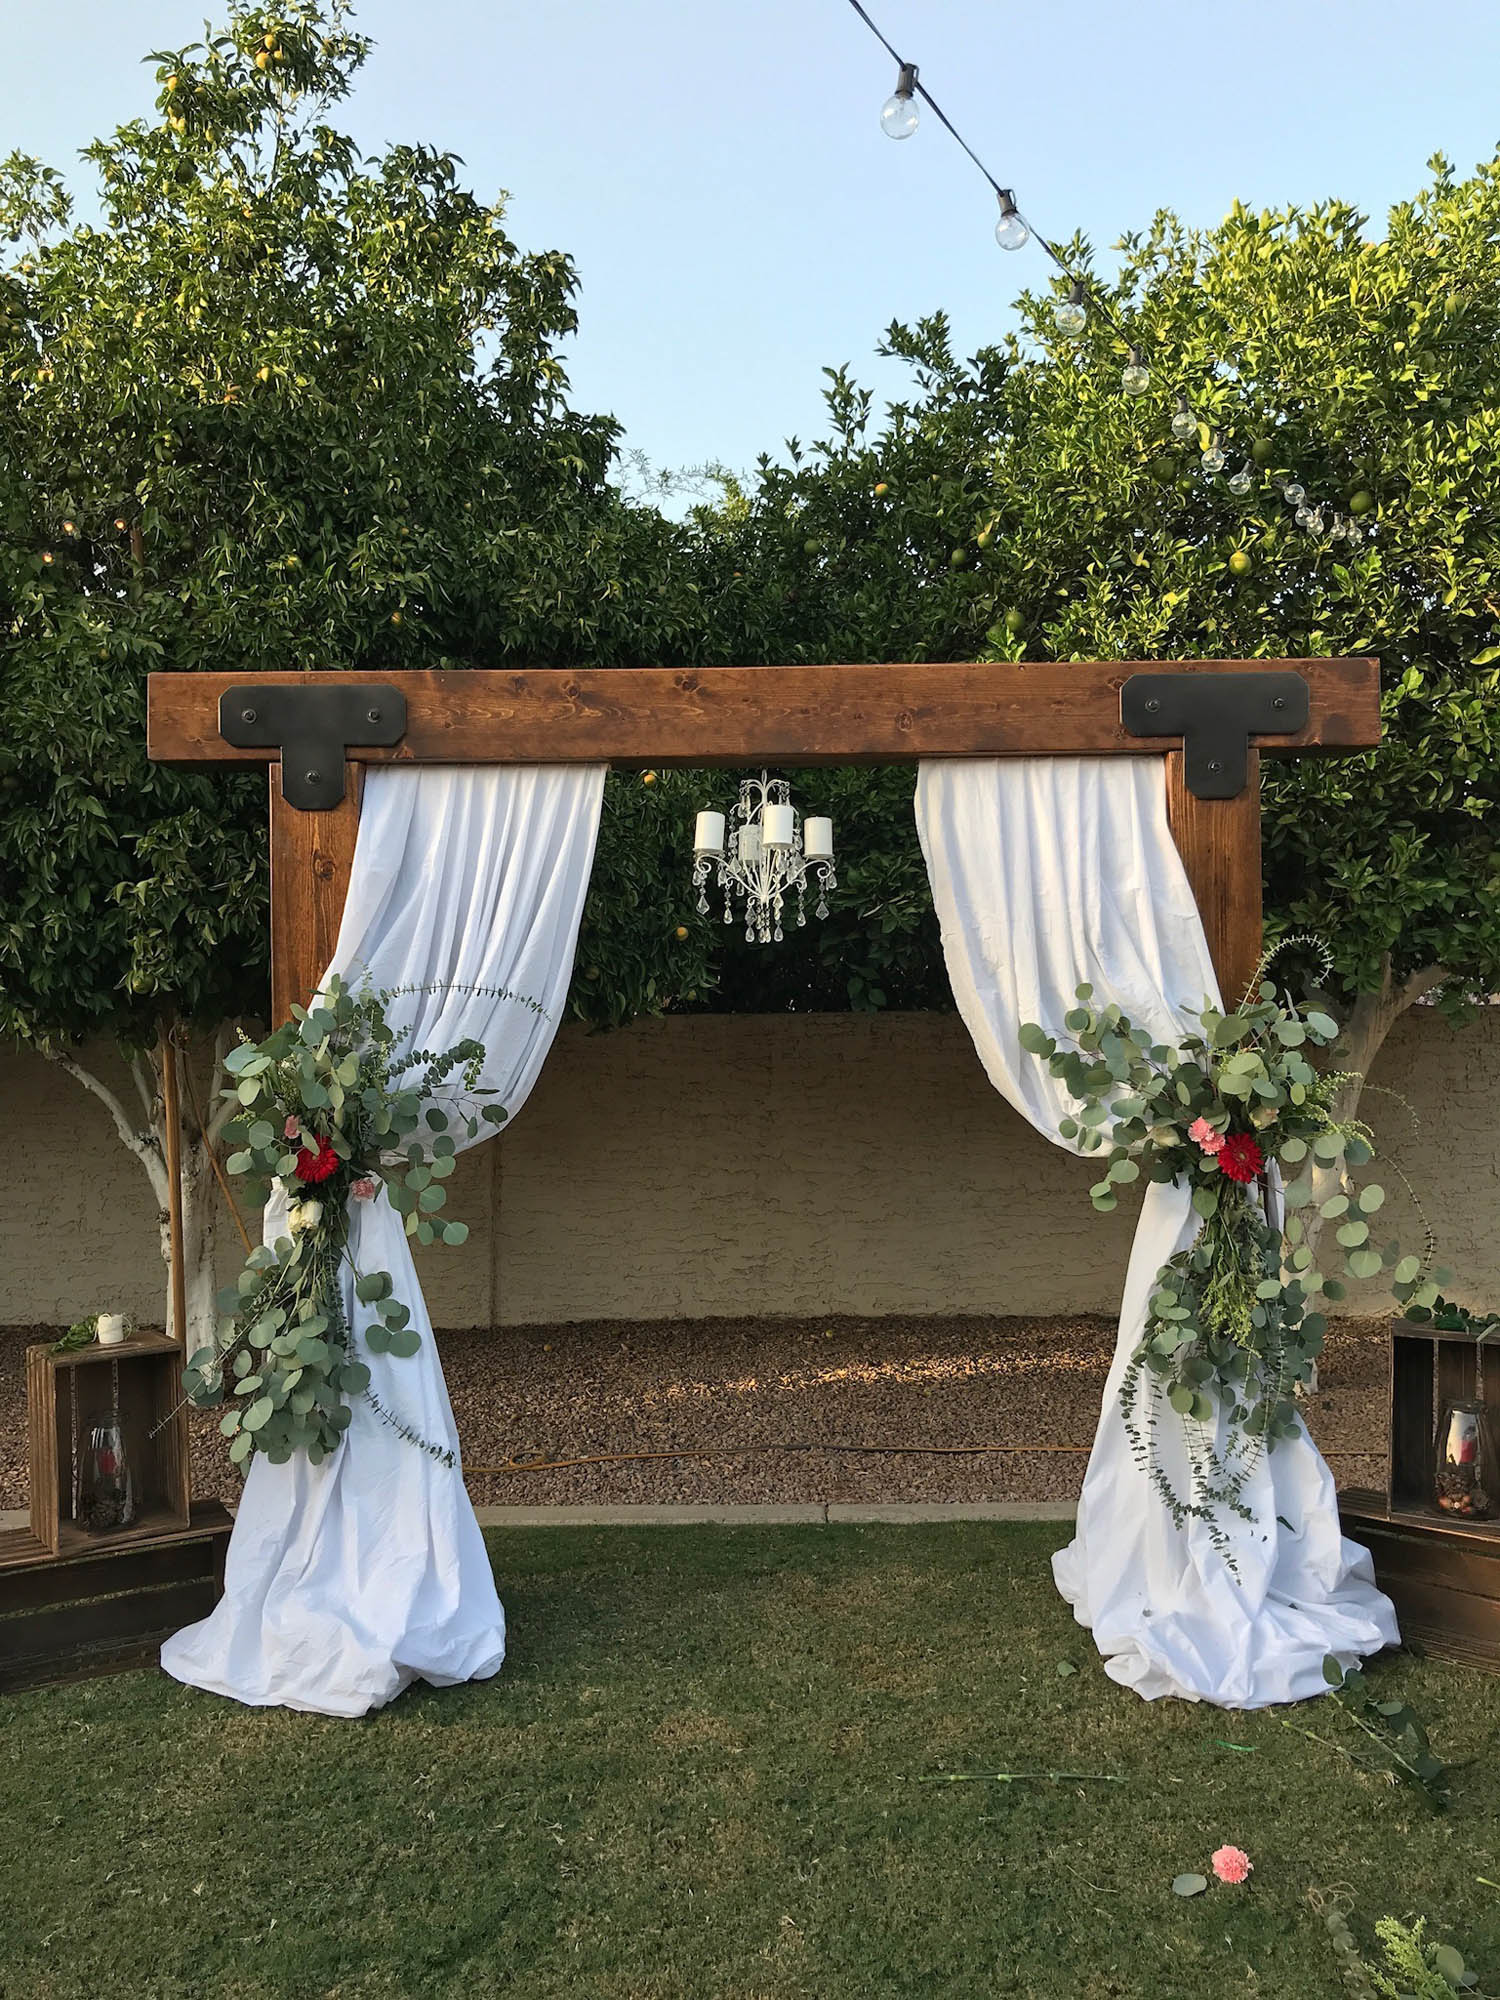 Wooden Wedding Arch Rental - Wood-n-Crate Designs